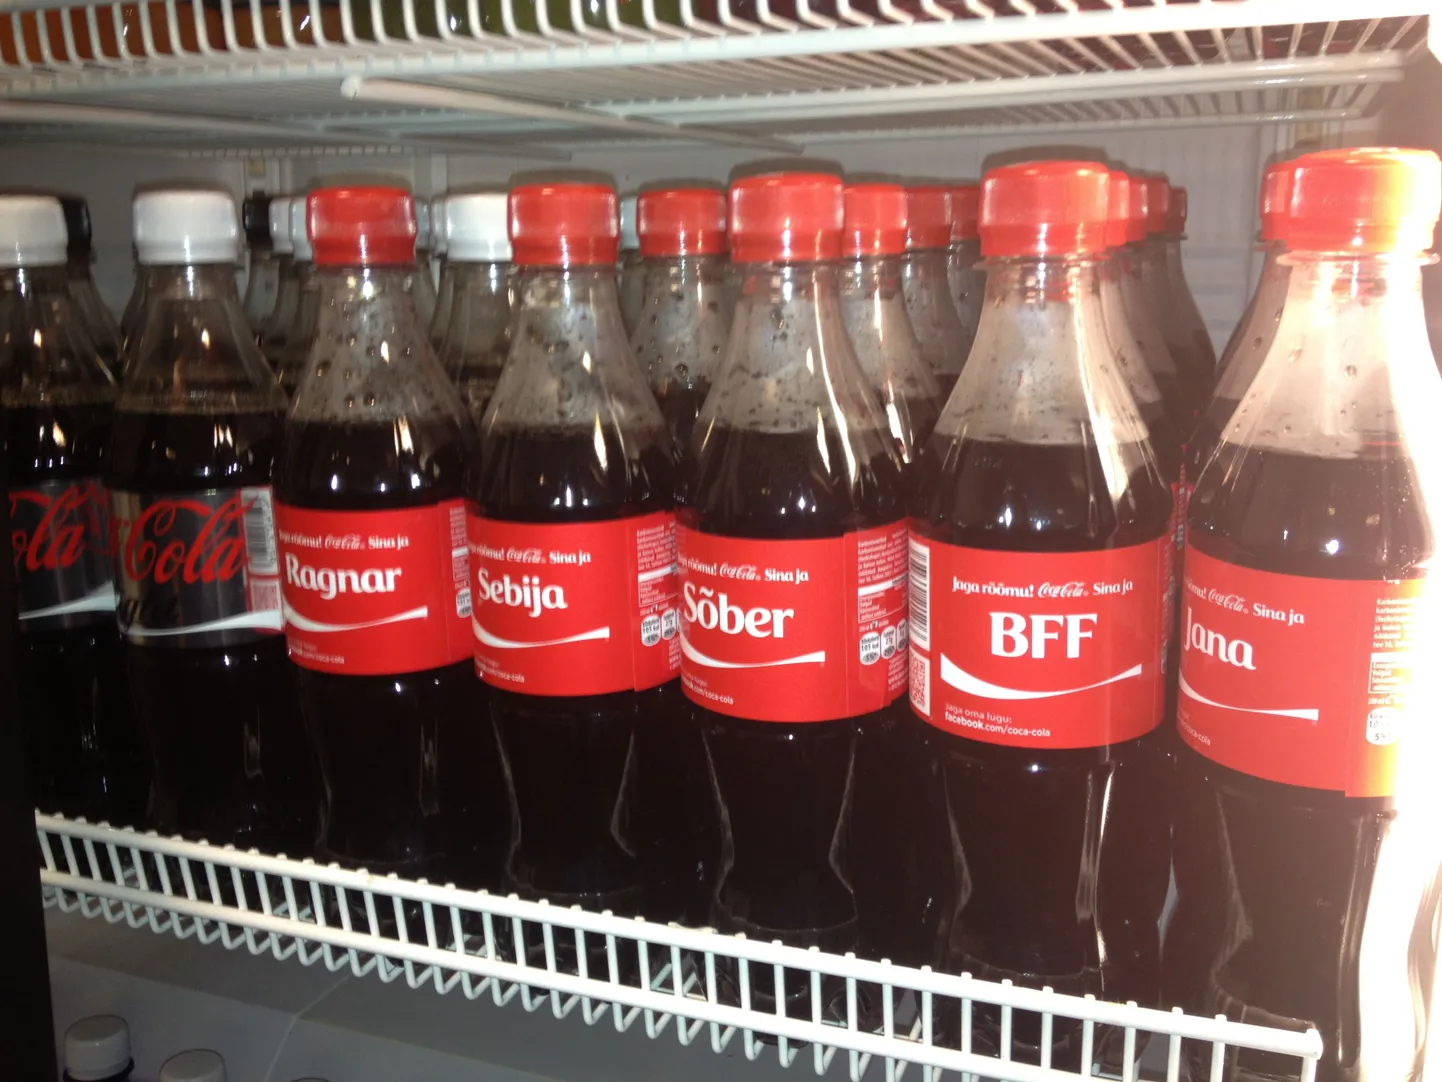 Coca Cola uues kuues pudelid.